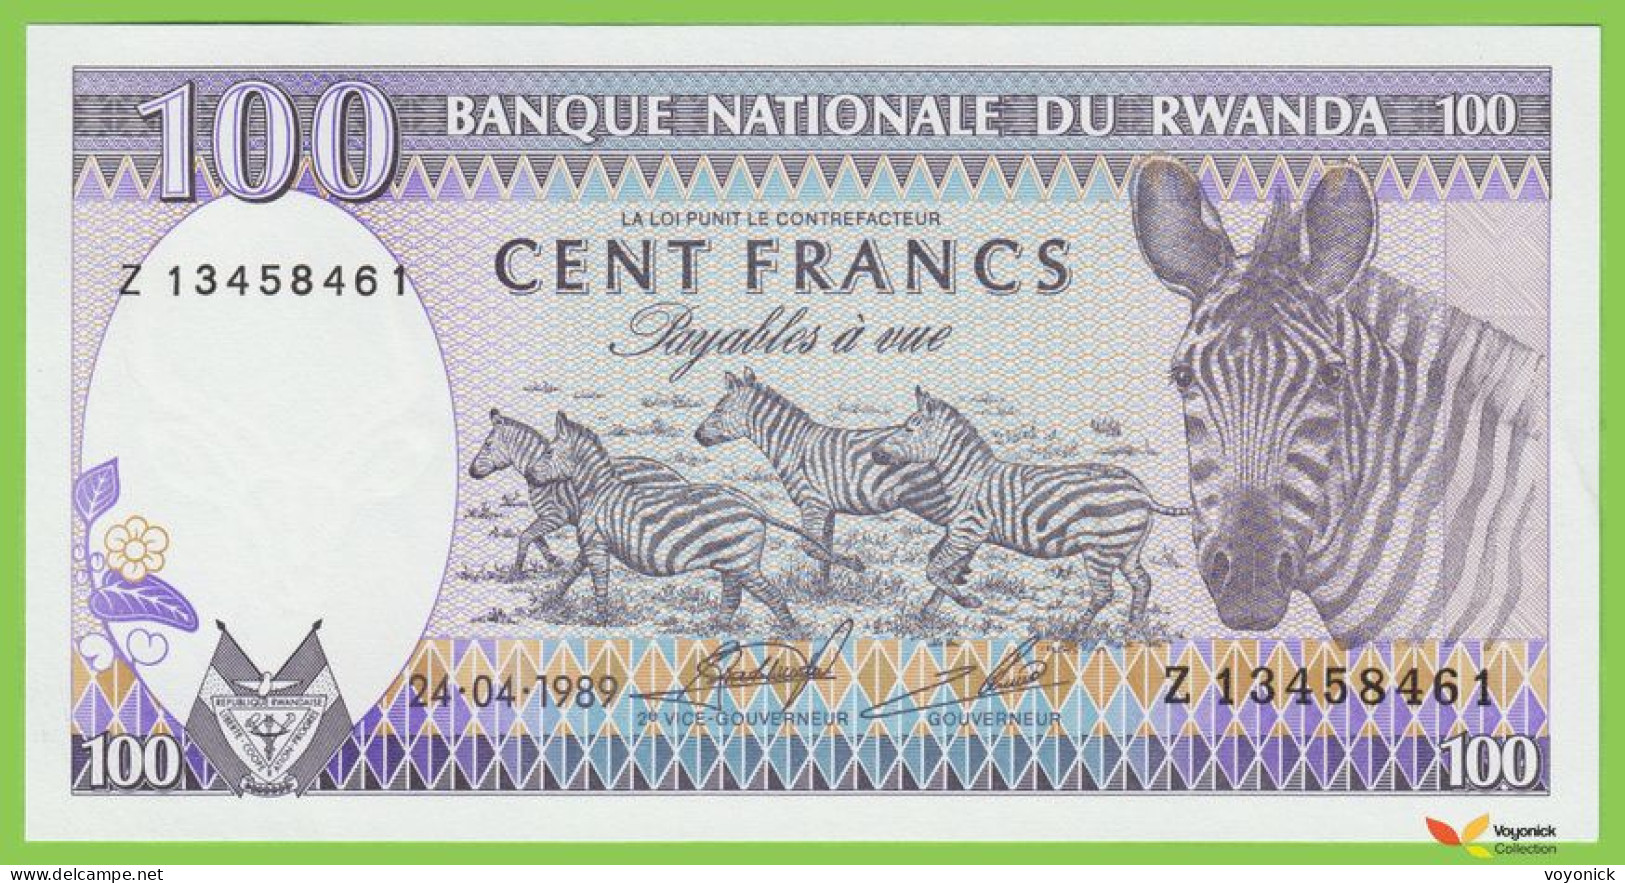 Voyo RWANDA 100 Francs 1989 P19 B119a Z UNC - Ruanda